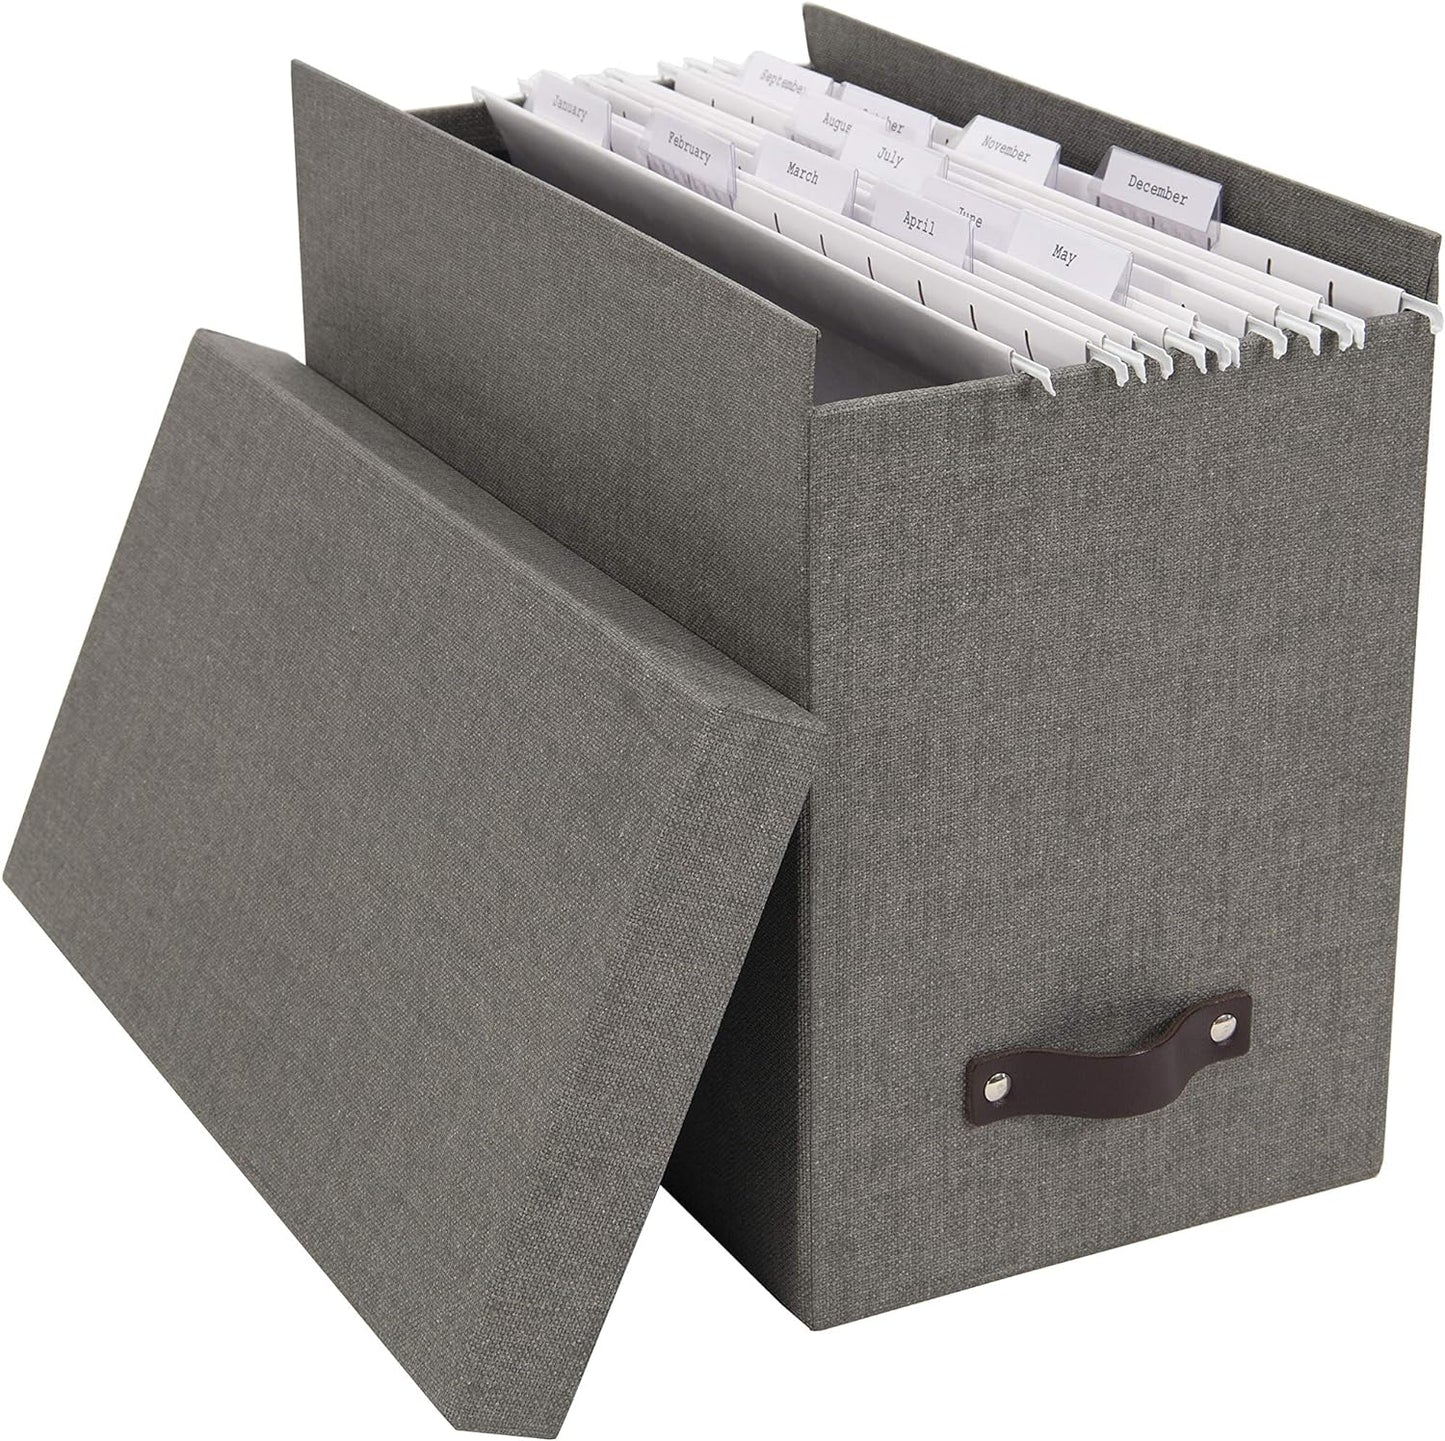 Bigso John Desktop File Box and Document Organizer for Important Paperwork 7.4’’ x 13’’ x 10.4’’